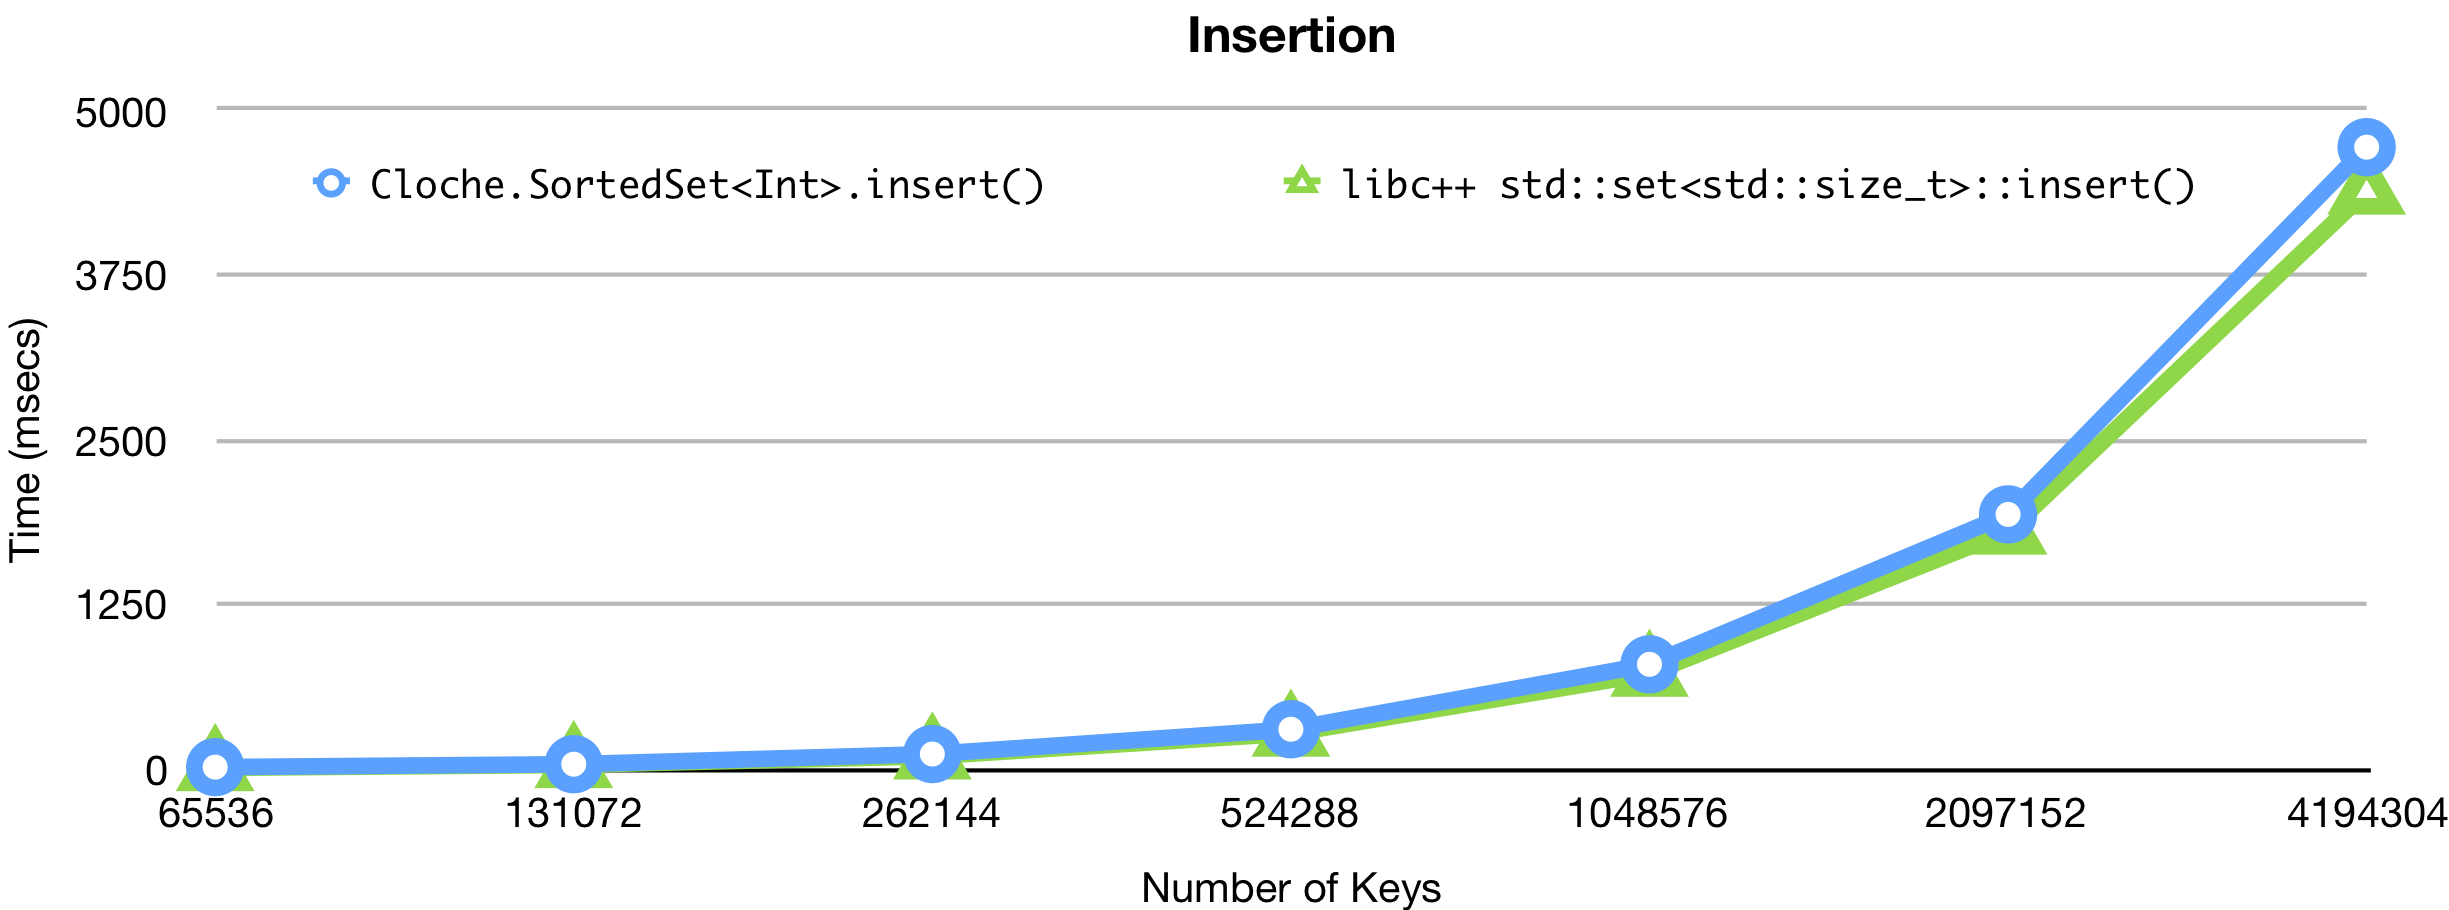 Insertion Performance Comparison under macOS